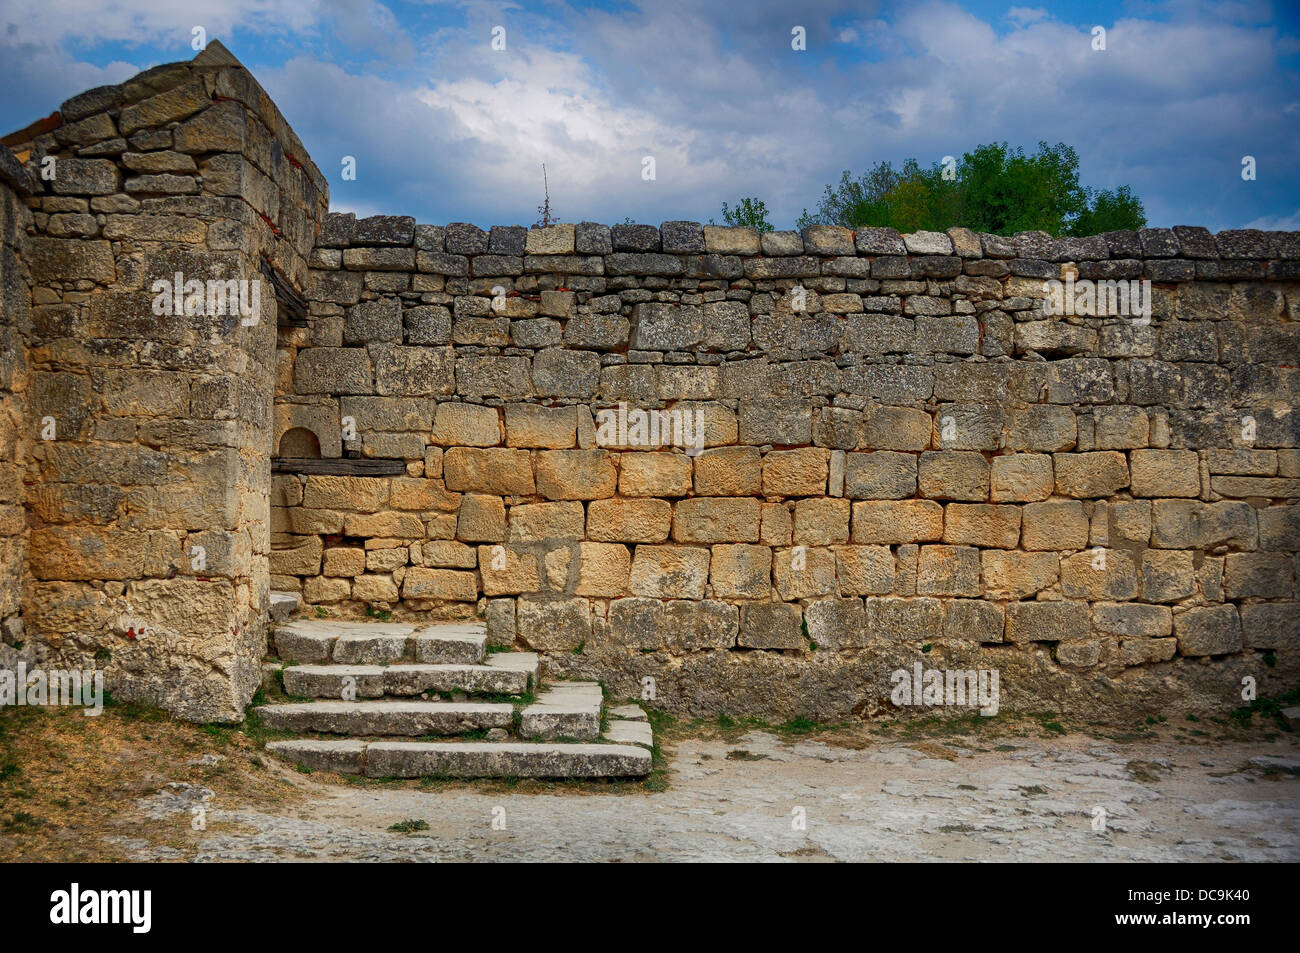 Chufut-Kale - Spelaean city - Tatar Fortress located in the mountains, Crimea, Ukraine Stock Photo